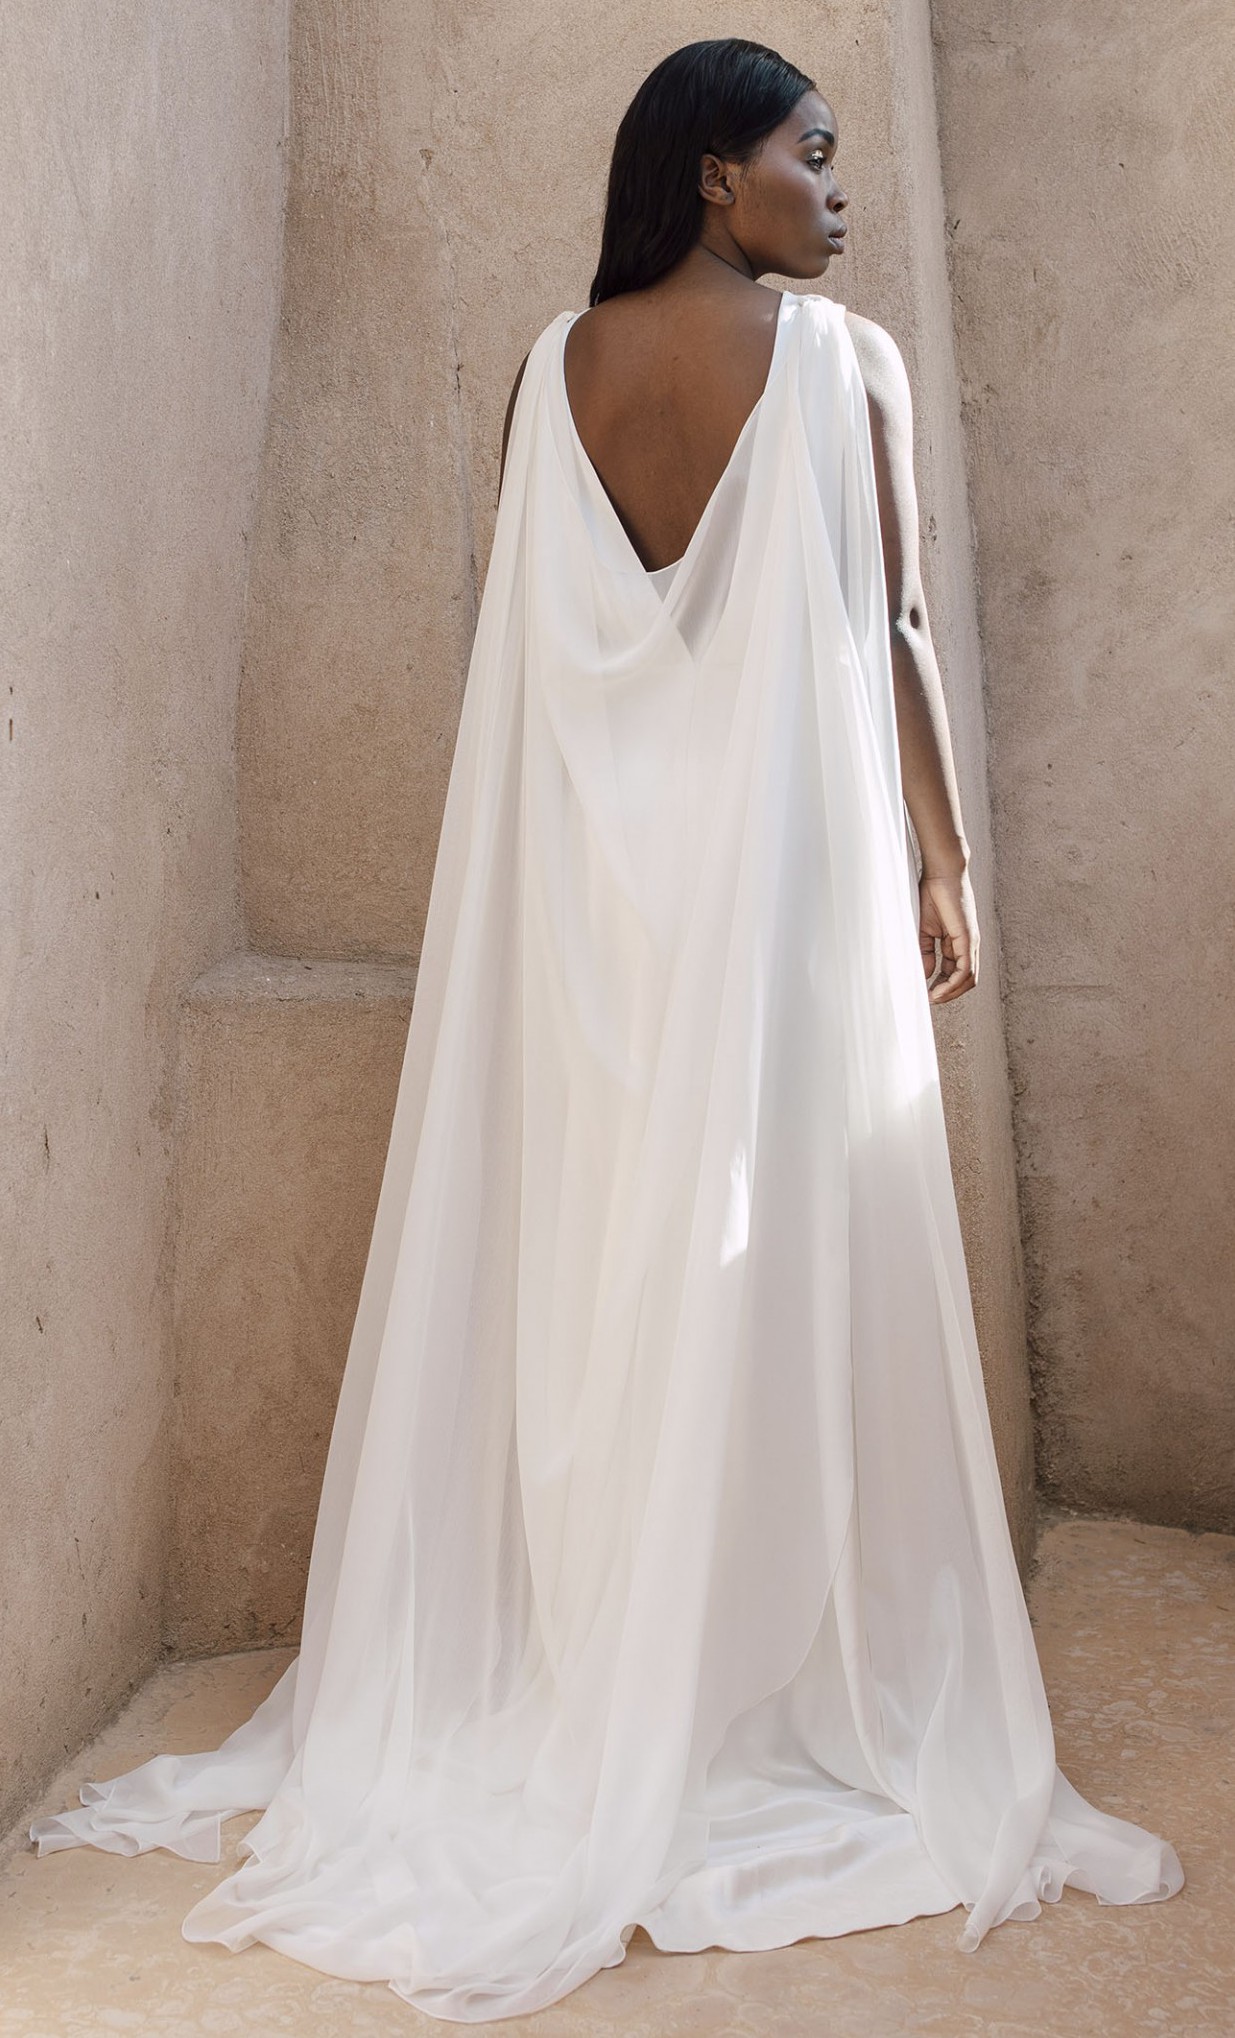 Charlie Brear Cressida Cape Sample Wedding Dress Save 30% - Stillwhite